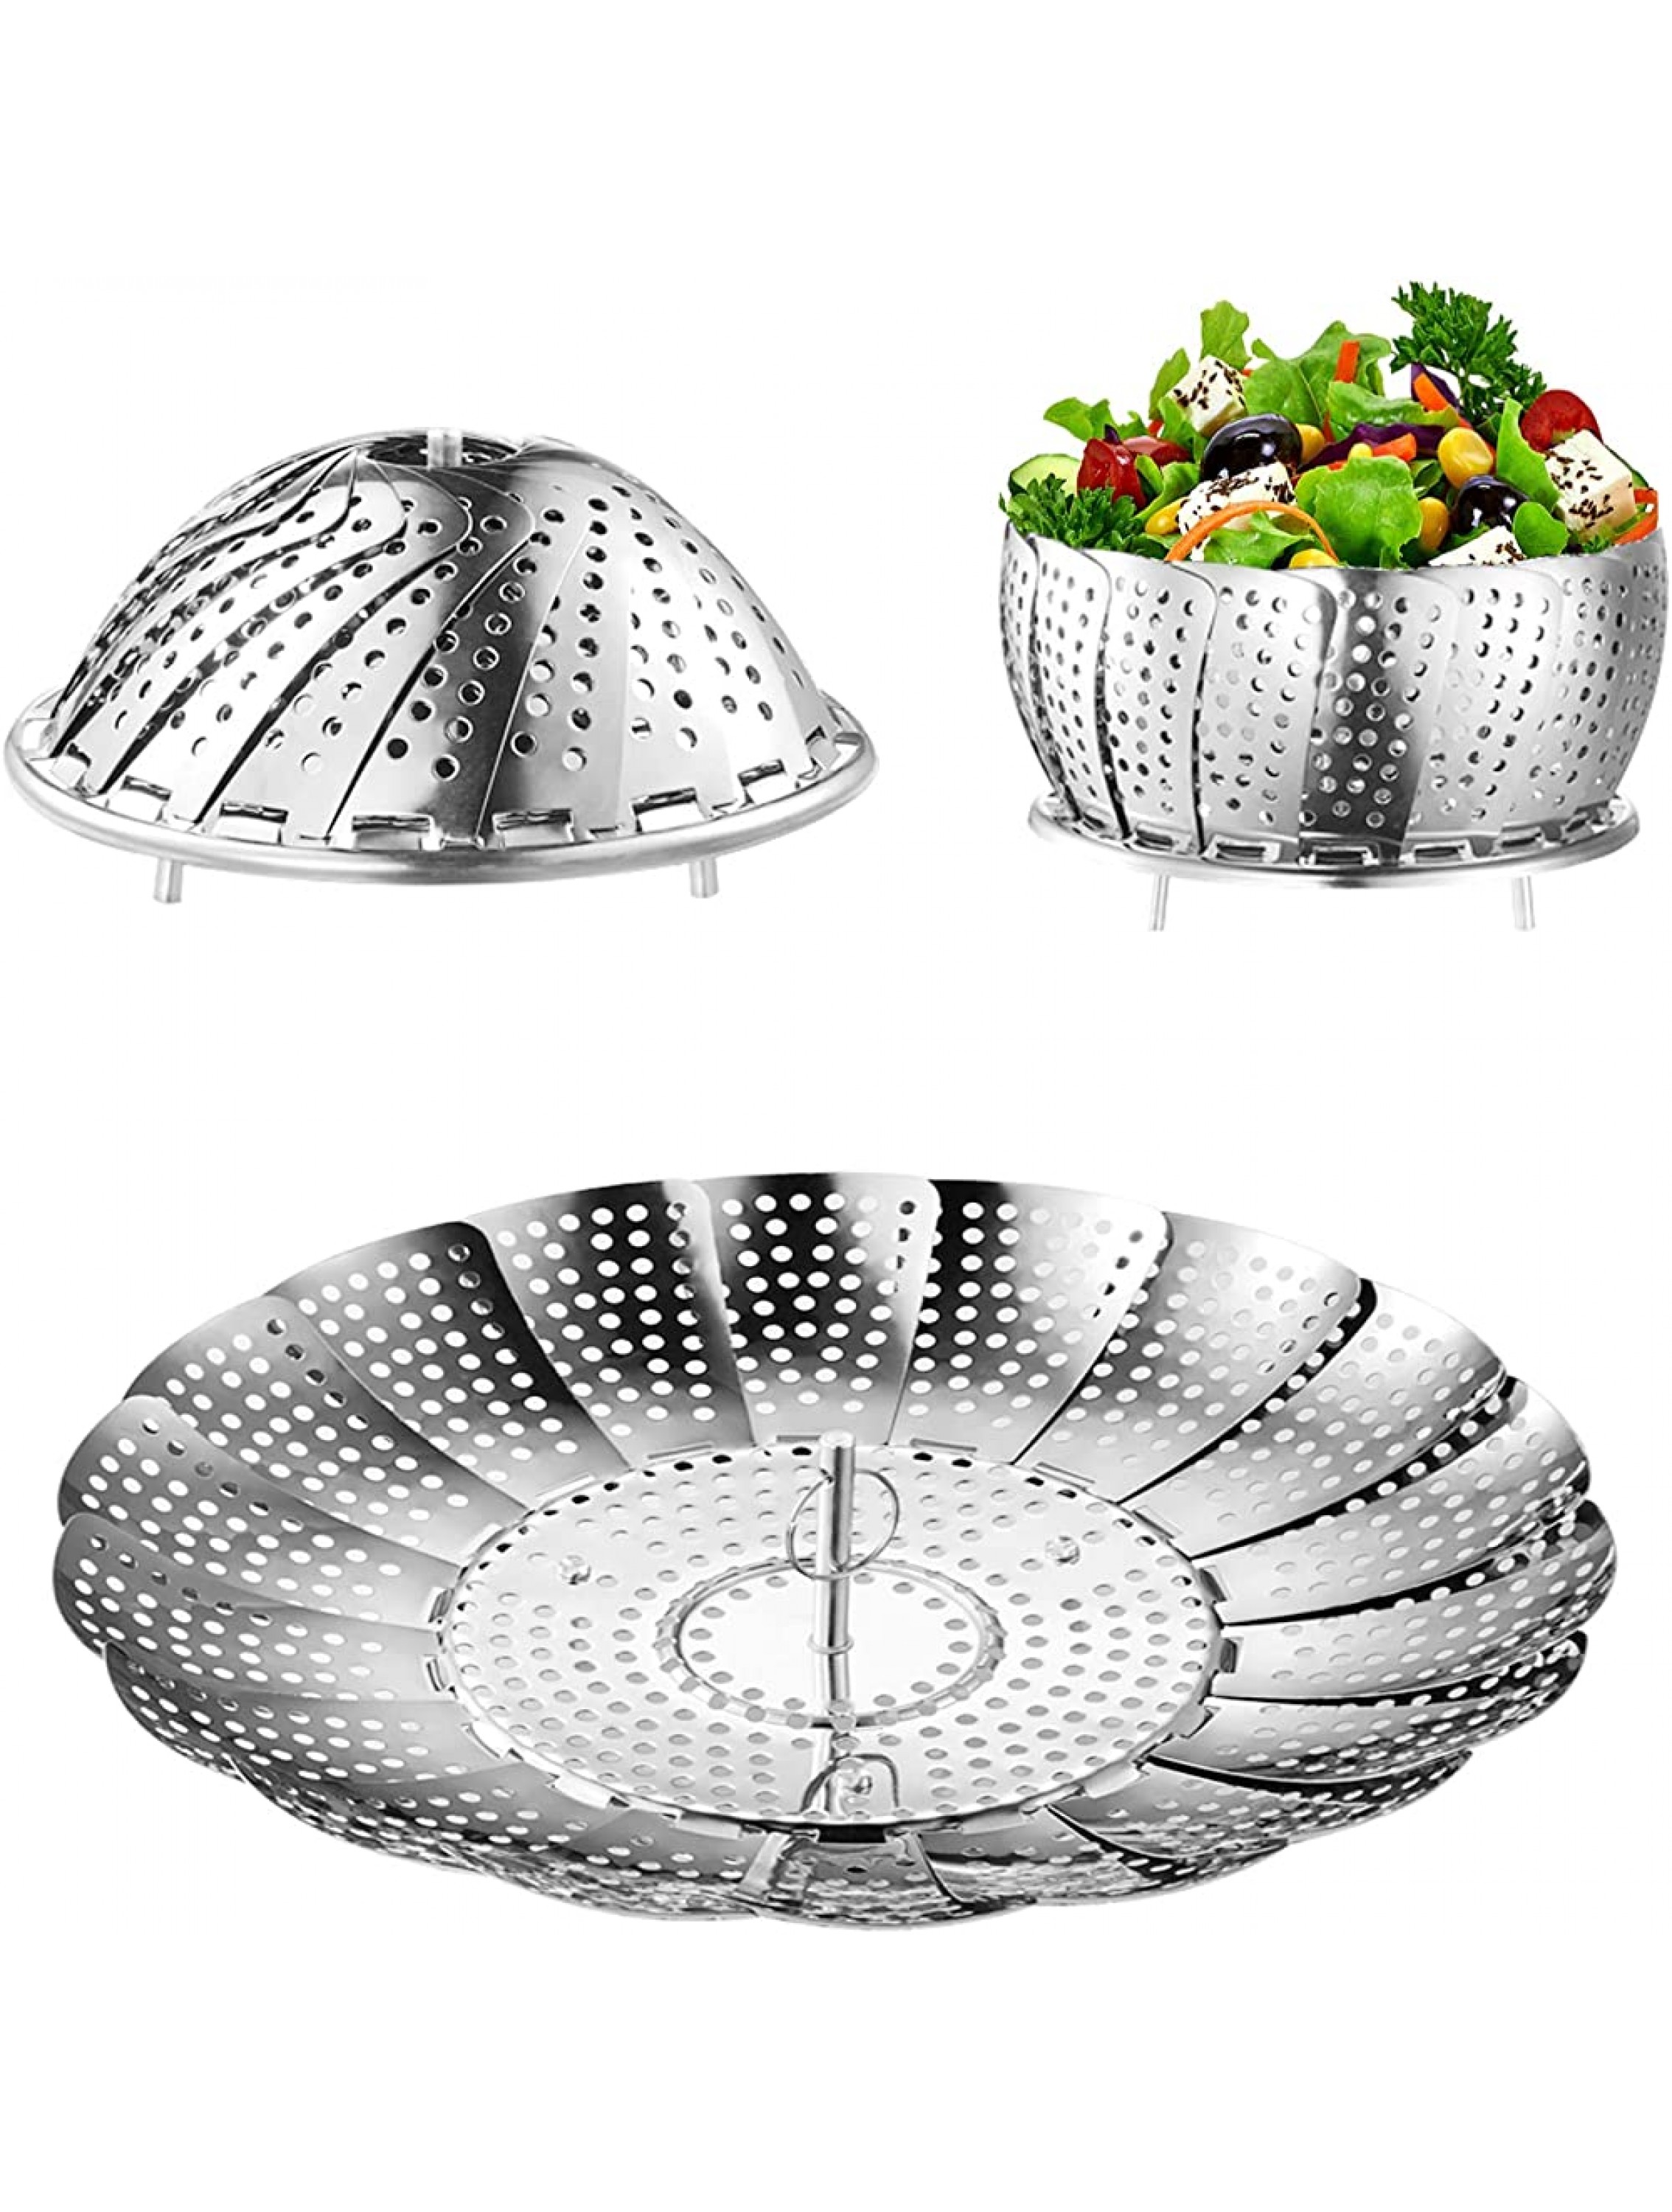 Steamer Basket Kmeivol Vegetable Steamer Stainless Steel Steamer Food Value Steamer Baskets for Cooking Healthy Steamer Basket Expandable to Fit Various Size Pot 6 to 8.7 - BRRF242Z0